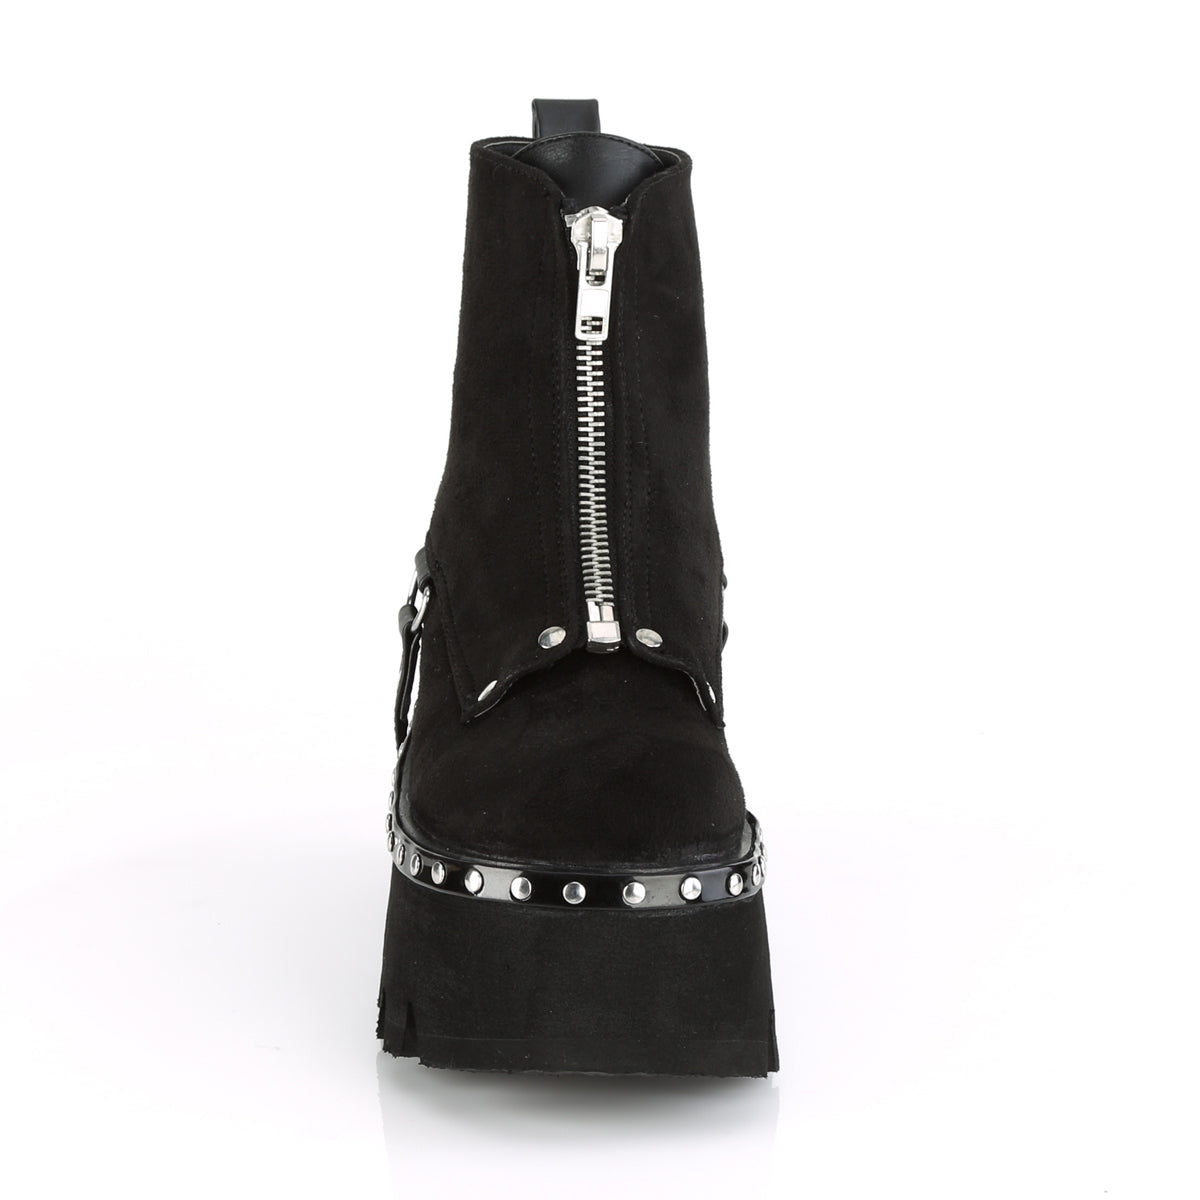 ASHES-100 Demonia Black Vegan Suede-Black V Le Women's Ankle Boots [Demonia Cult Alternative Footwear]